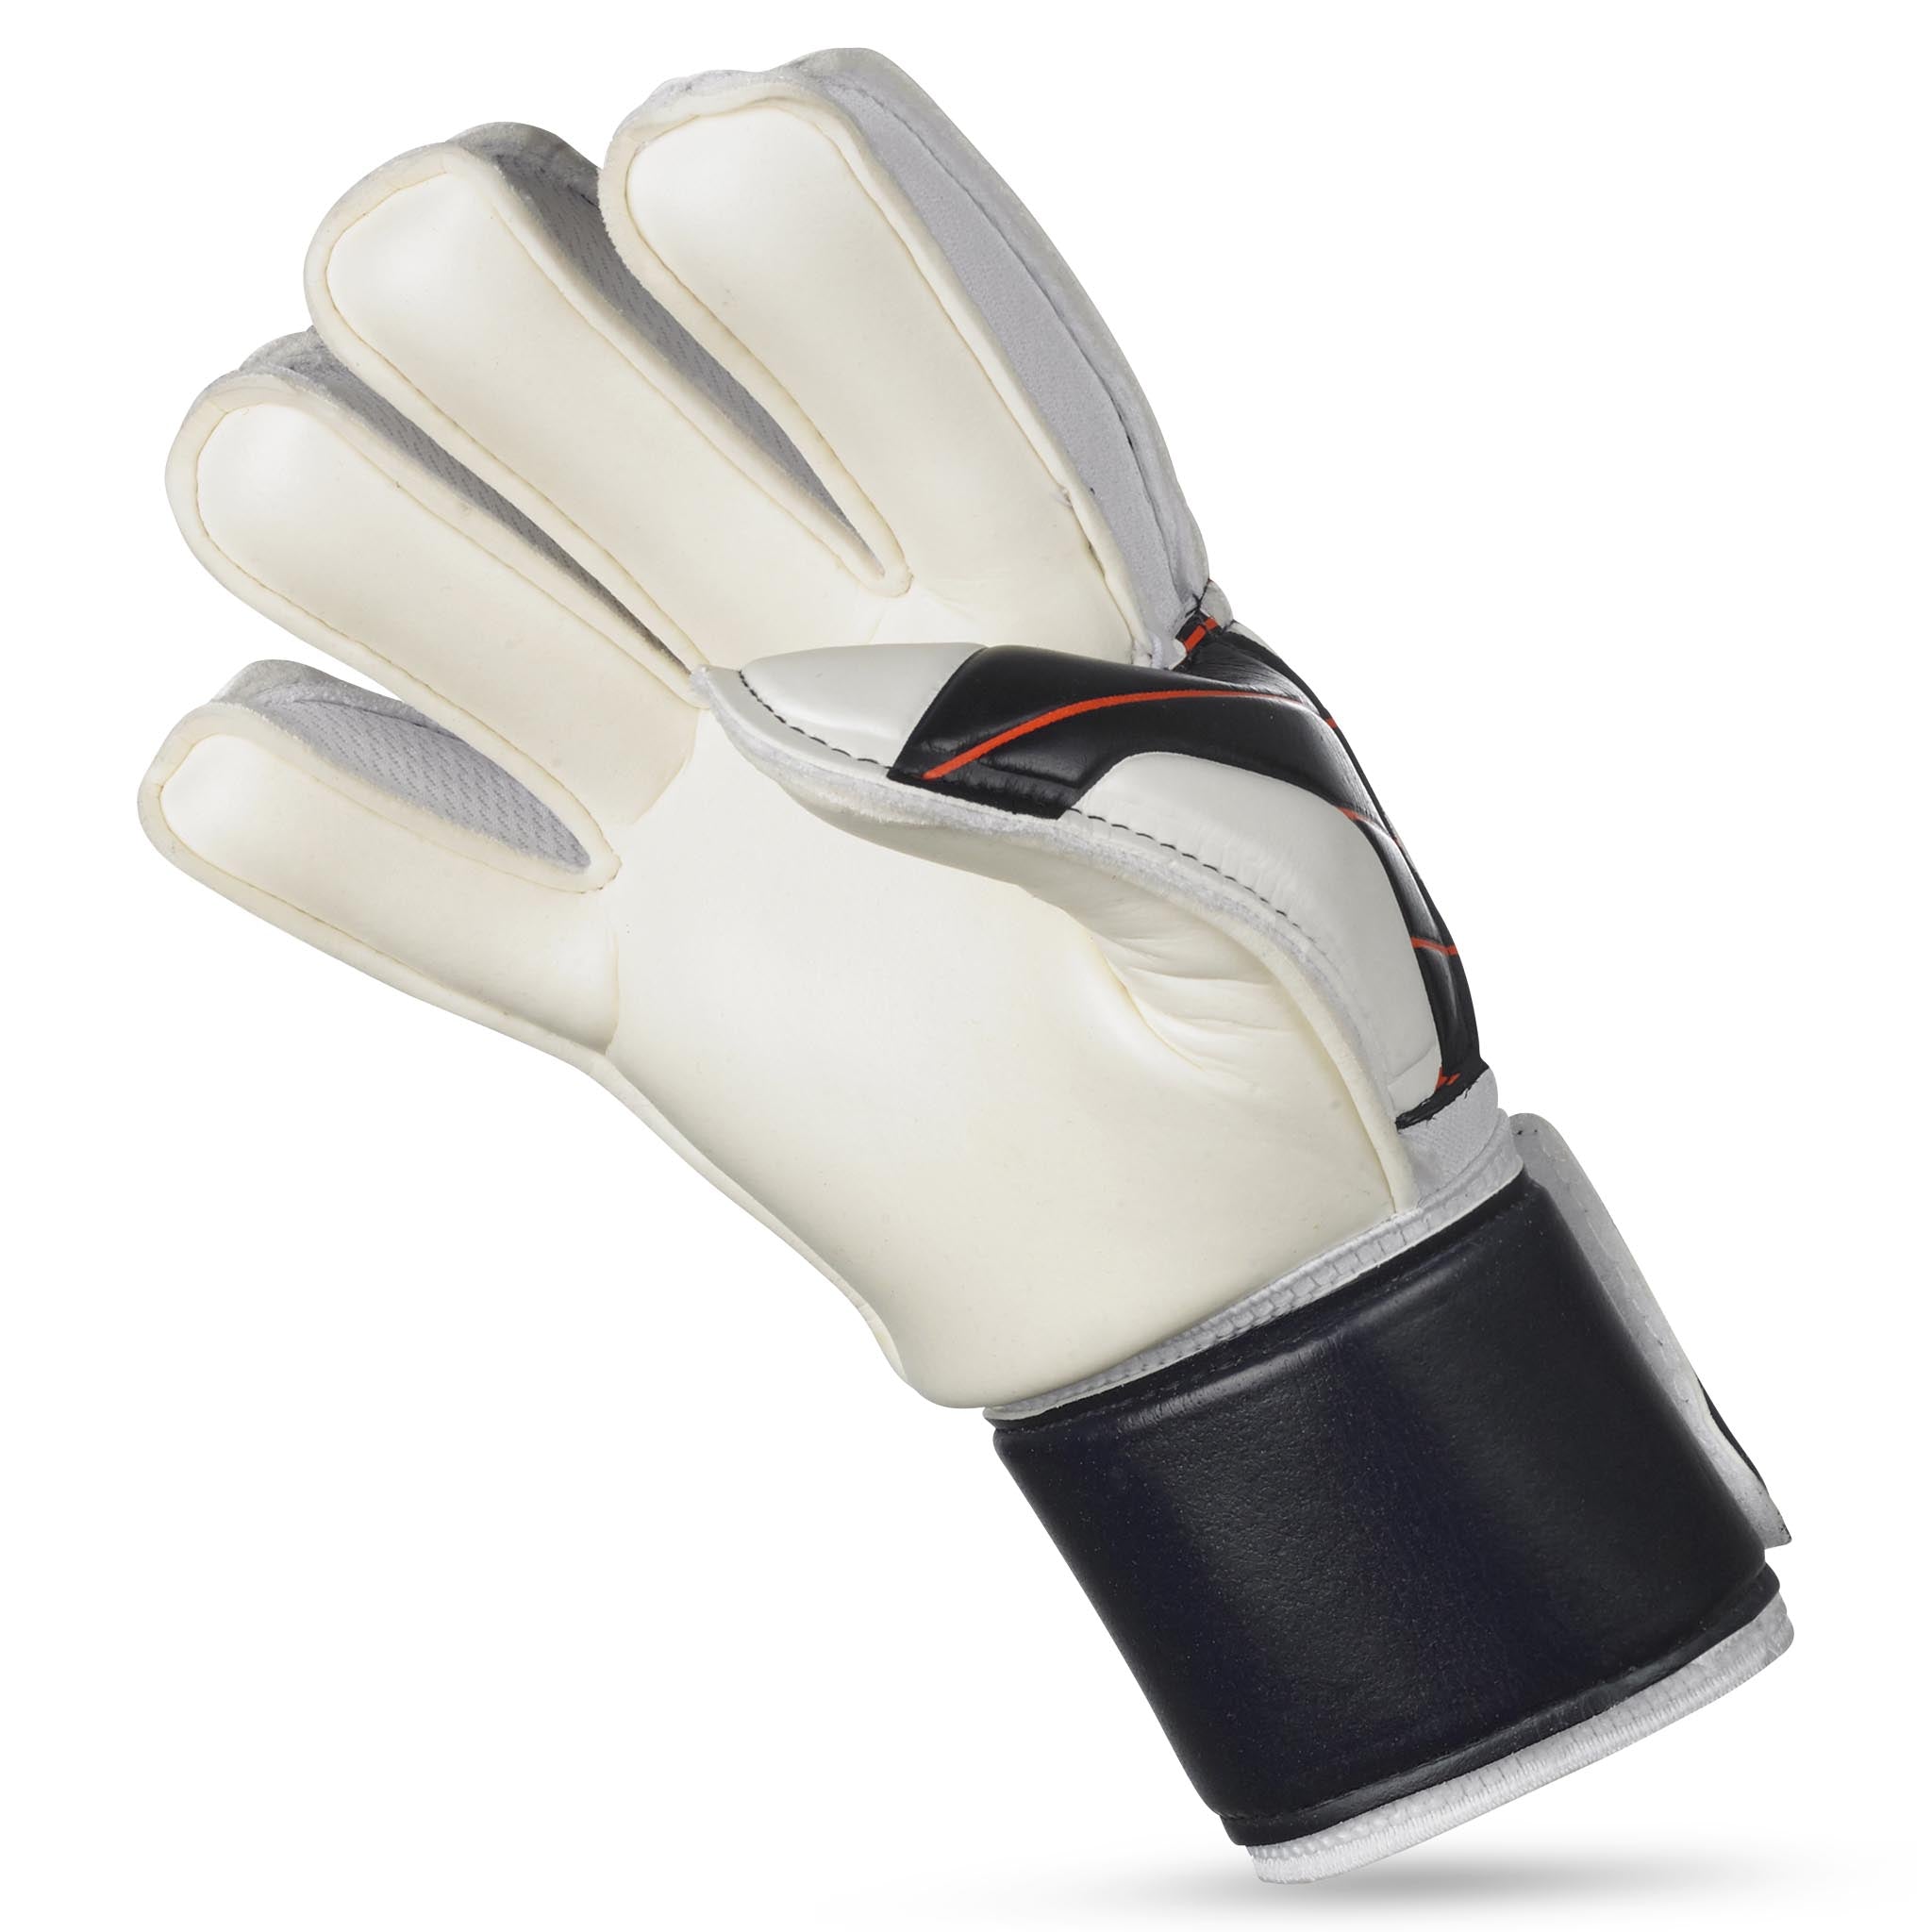 Goalkeeper gloves - 04 Protection #colour_blue/white